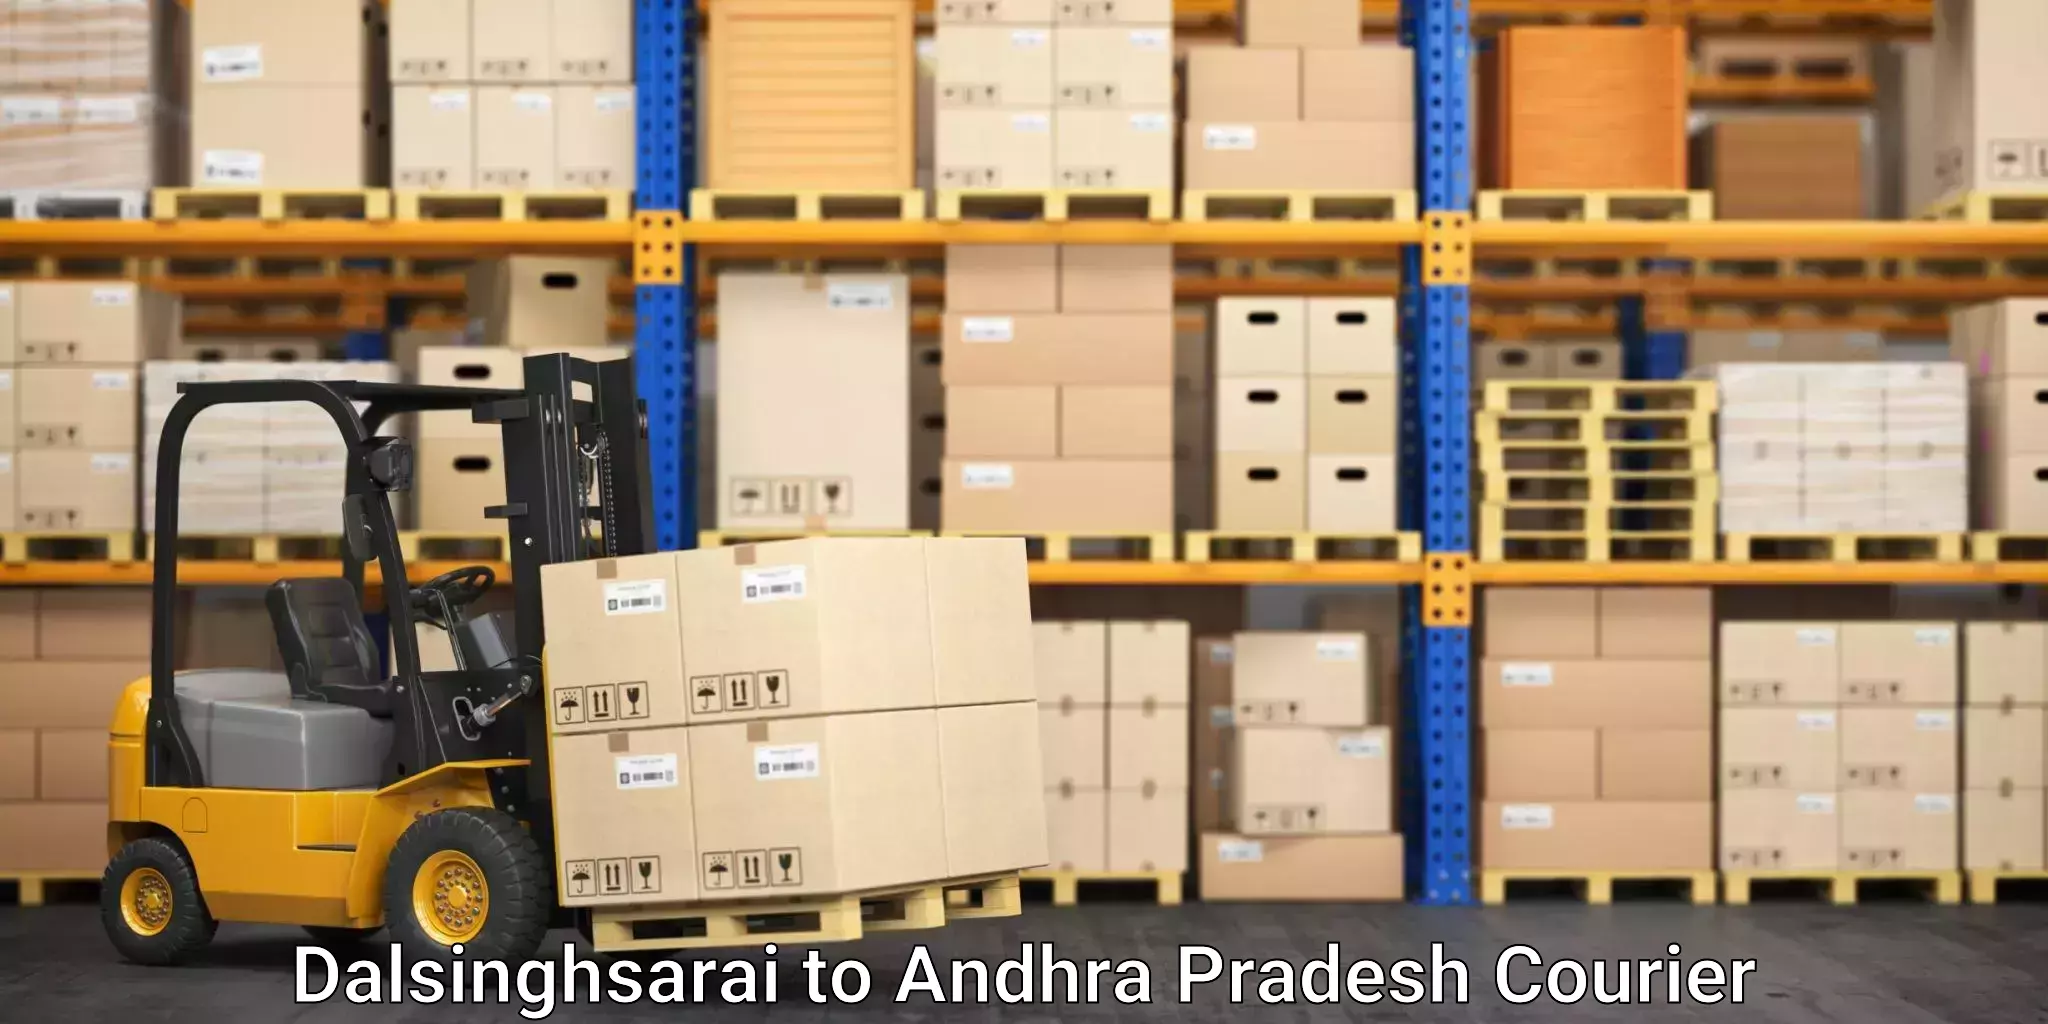 Full-service movers Dalsinghsarai to Andhra Pradesh